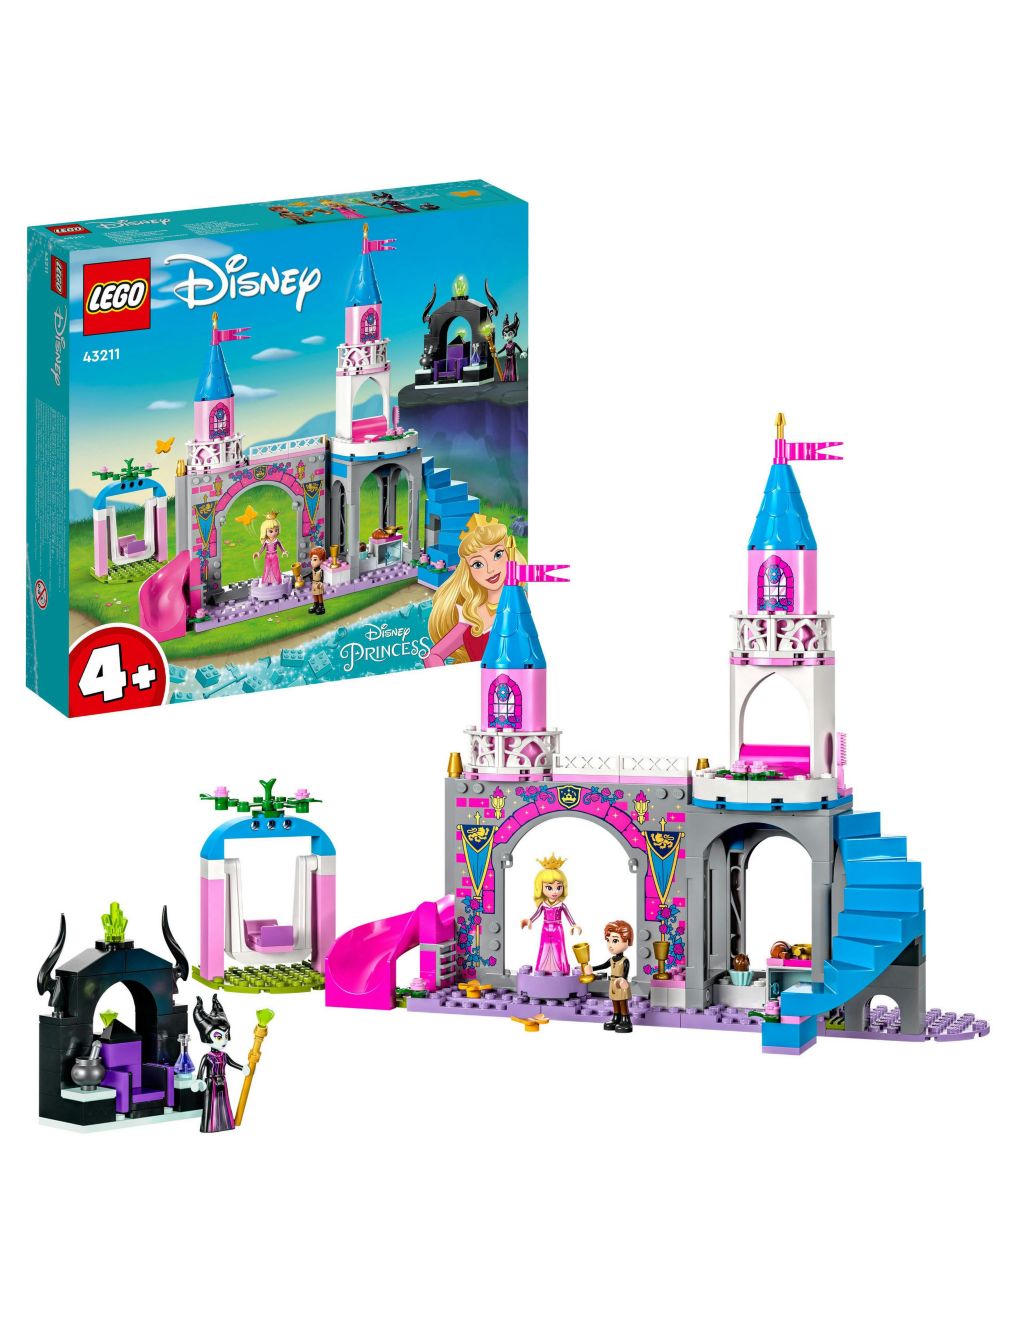 LEGO|Disney Princess Aurora's Castle Set 43211 (4+ Yrs)